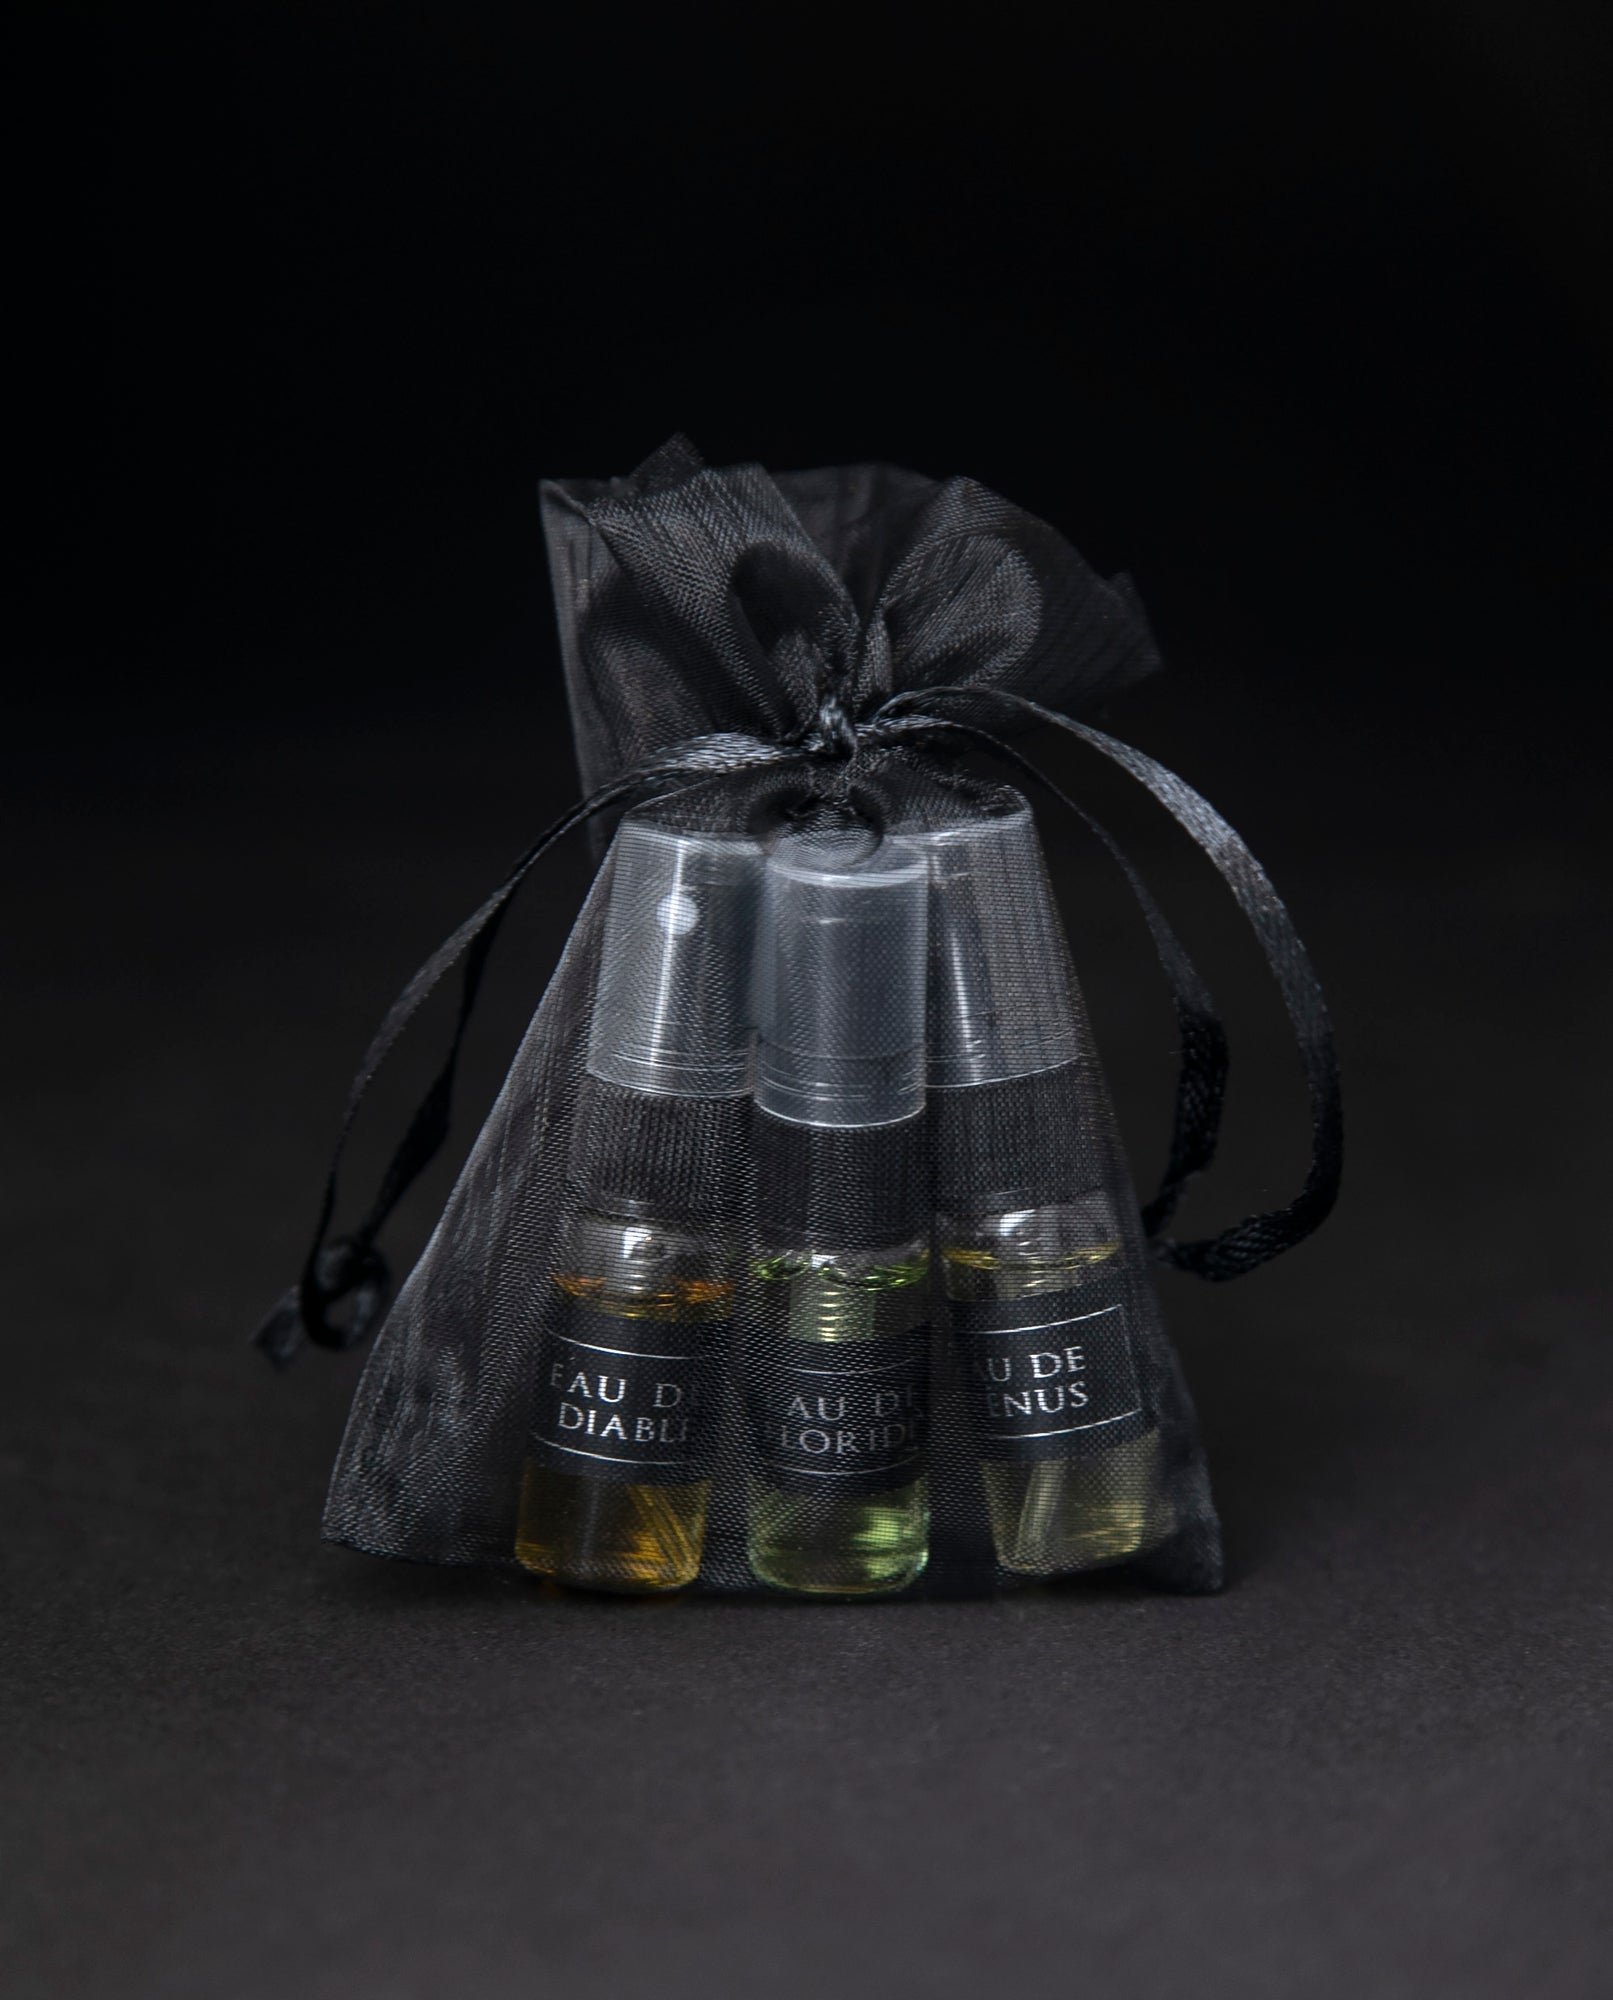 Lvnea Natural Perfume Sample Set by Lvnea